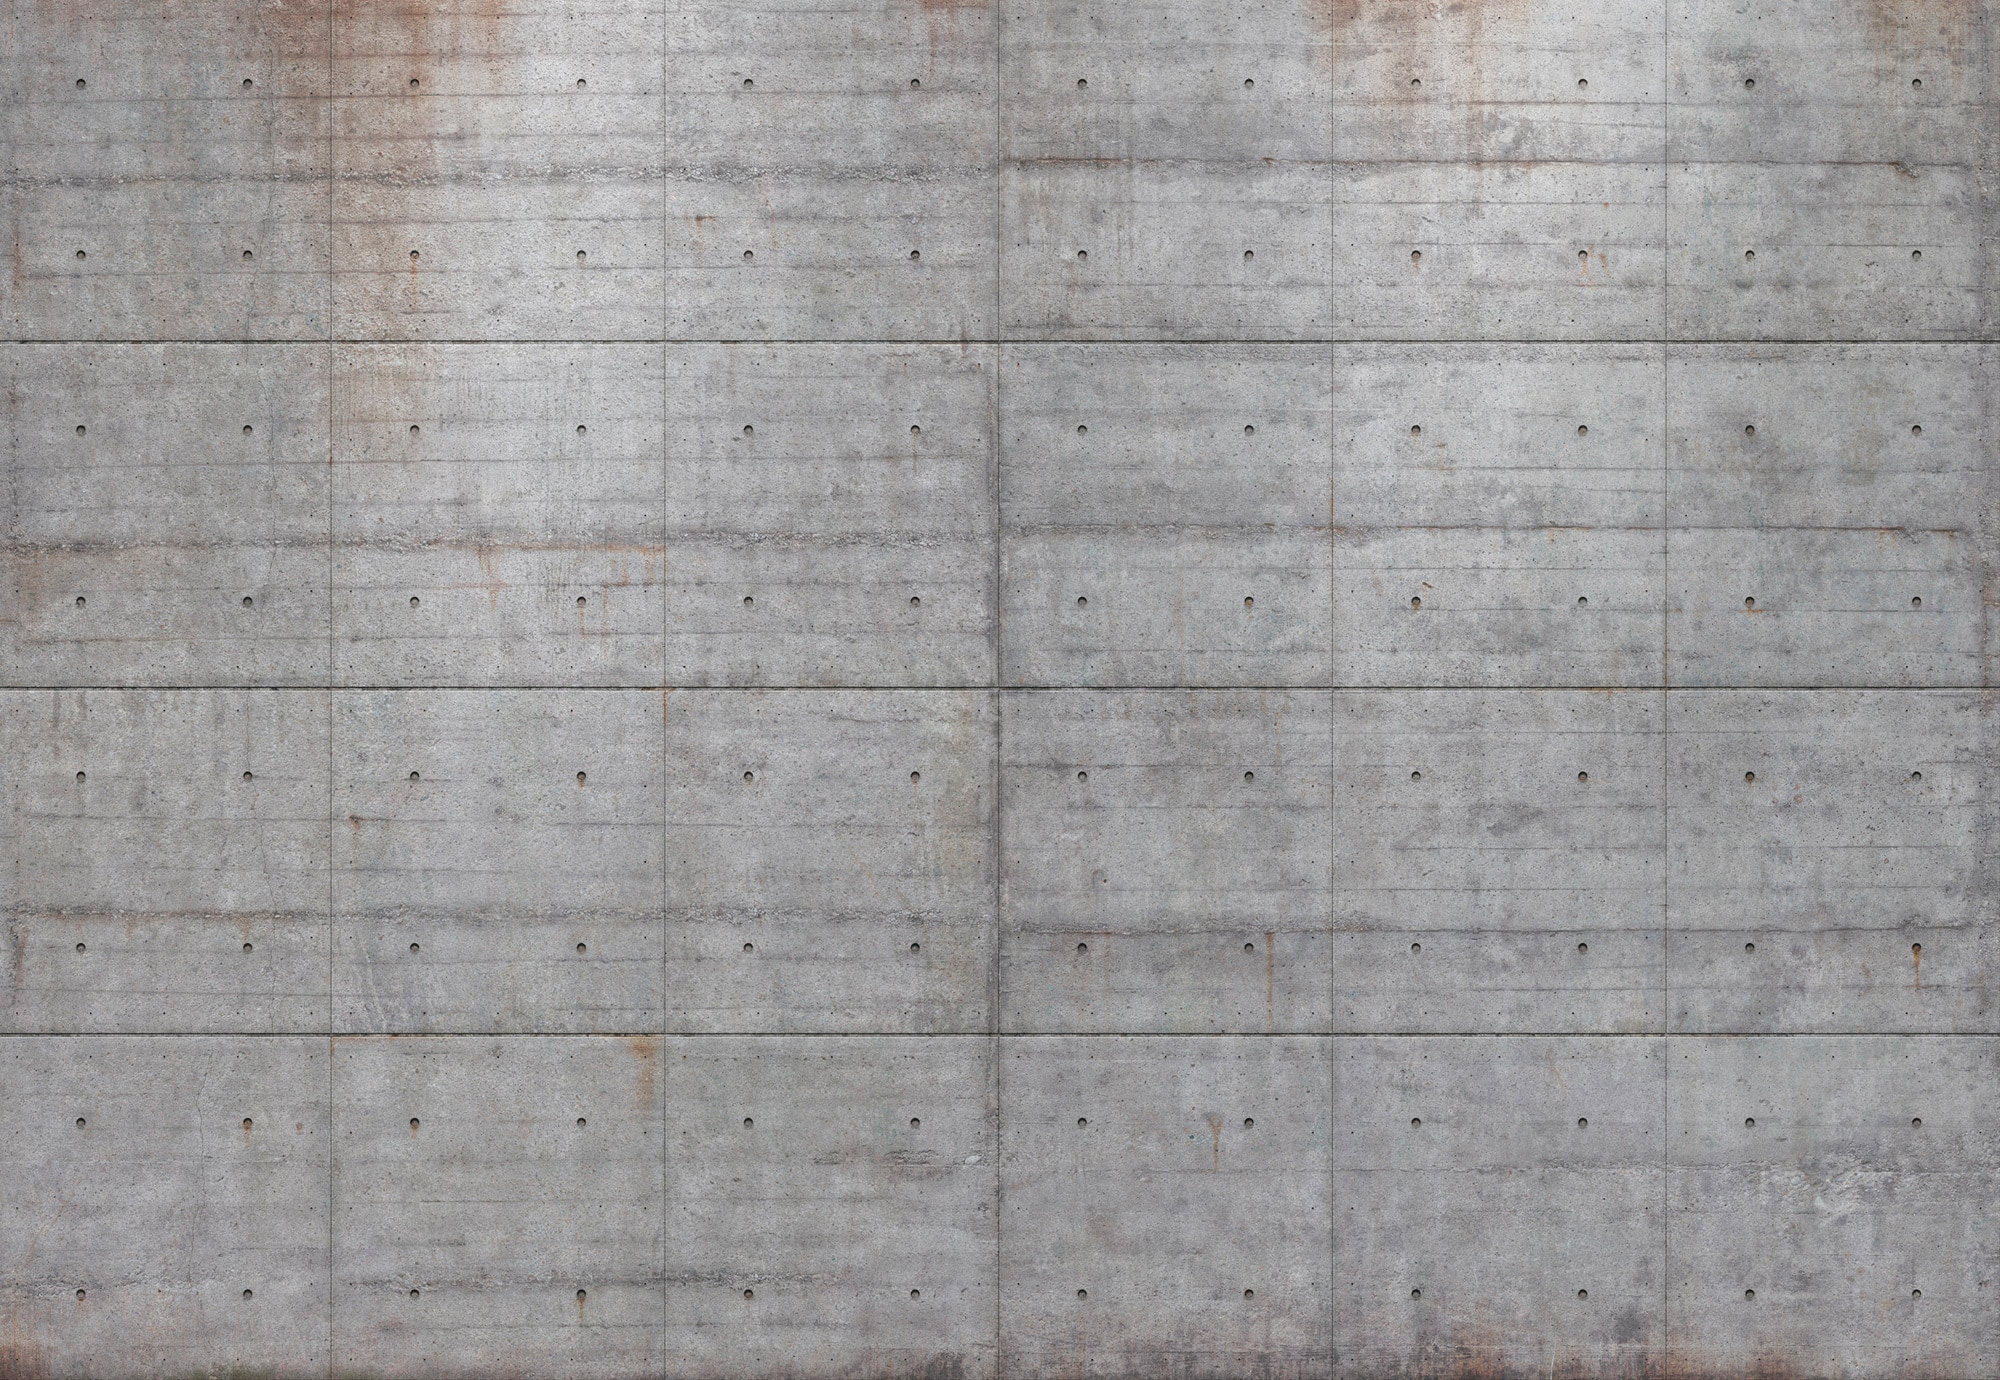 Fototapete »Concrete Blocks«, 368x254 cm (Breite x Höhe), inklusive Kleister